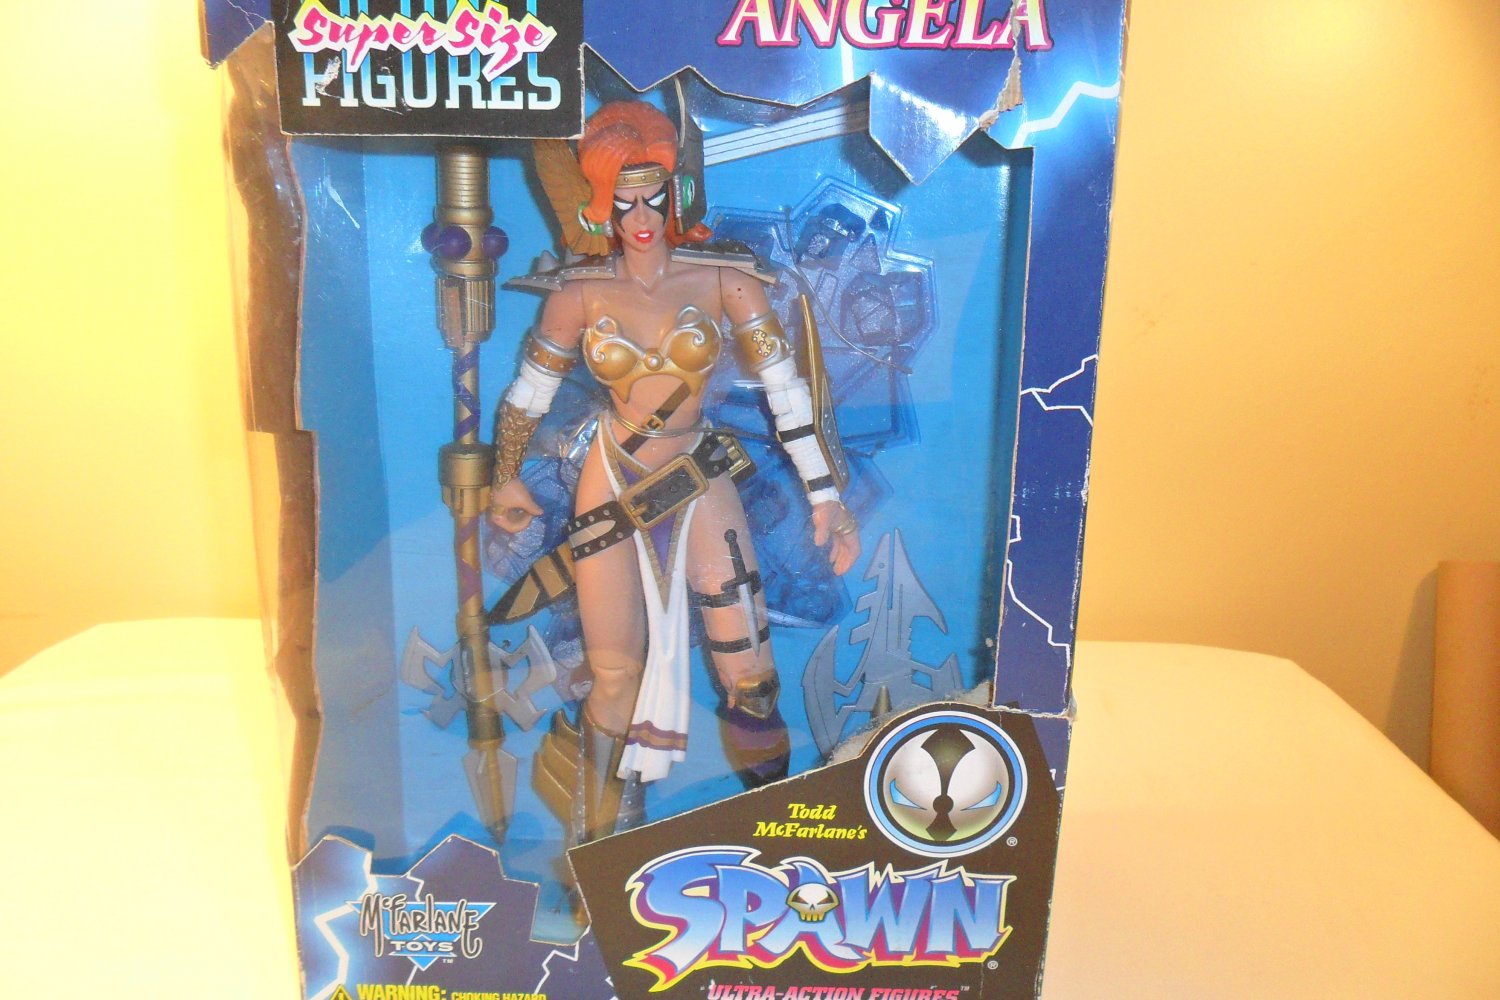 MIB 1996 Spawn Super Size Figures Angela Mcfarlane Toys Ultra Action Figure